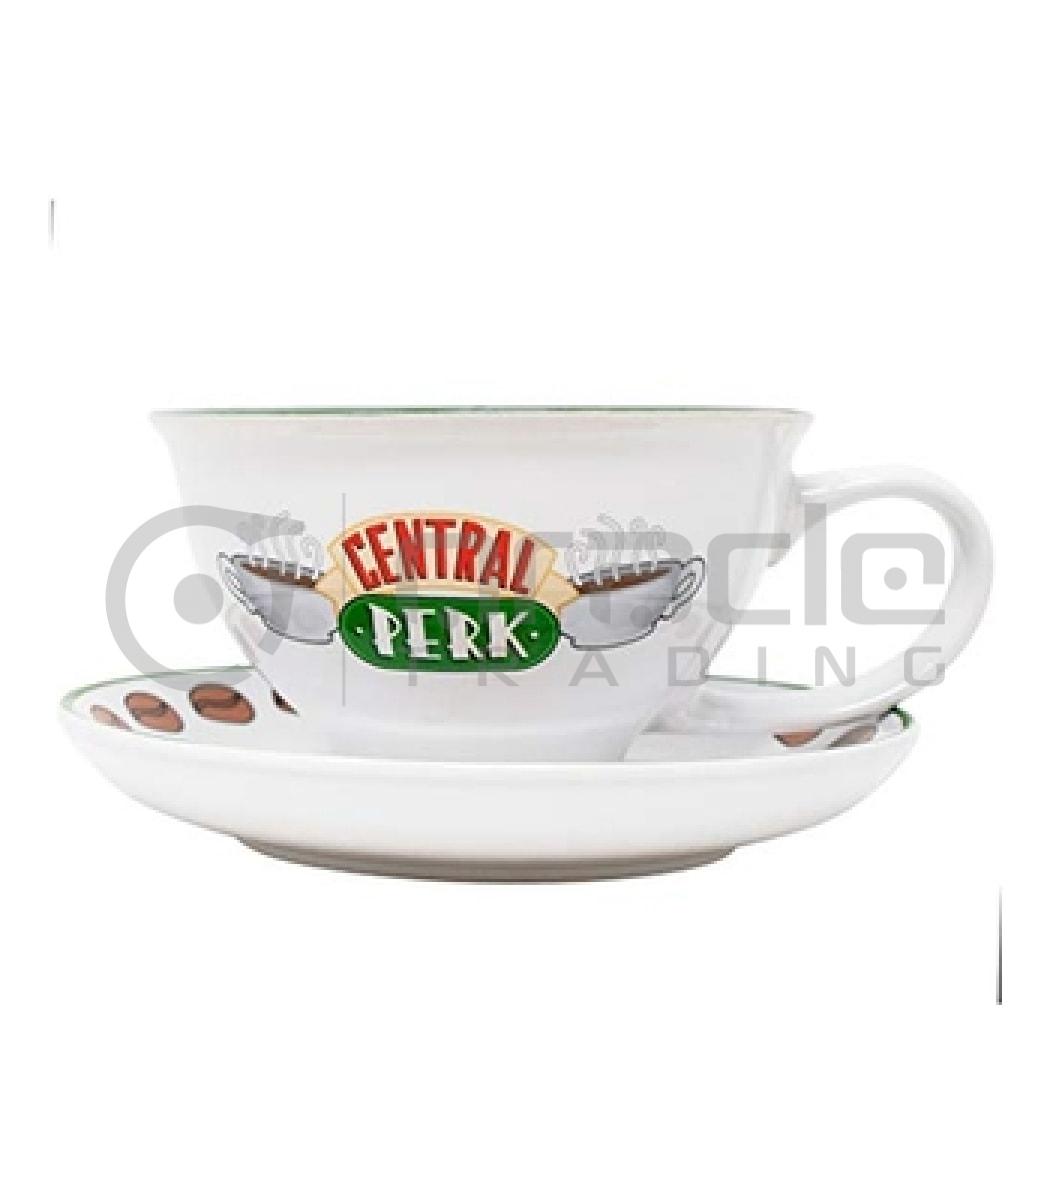 Friends Teacup & Saucer Set - Central Perk